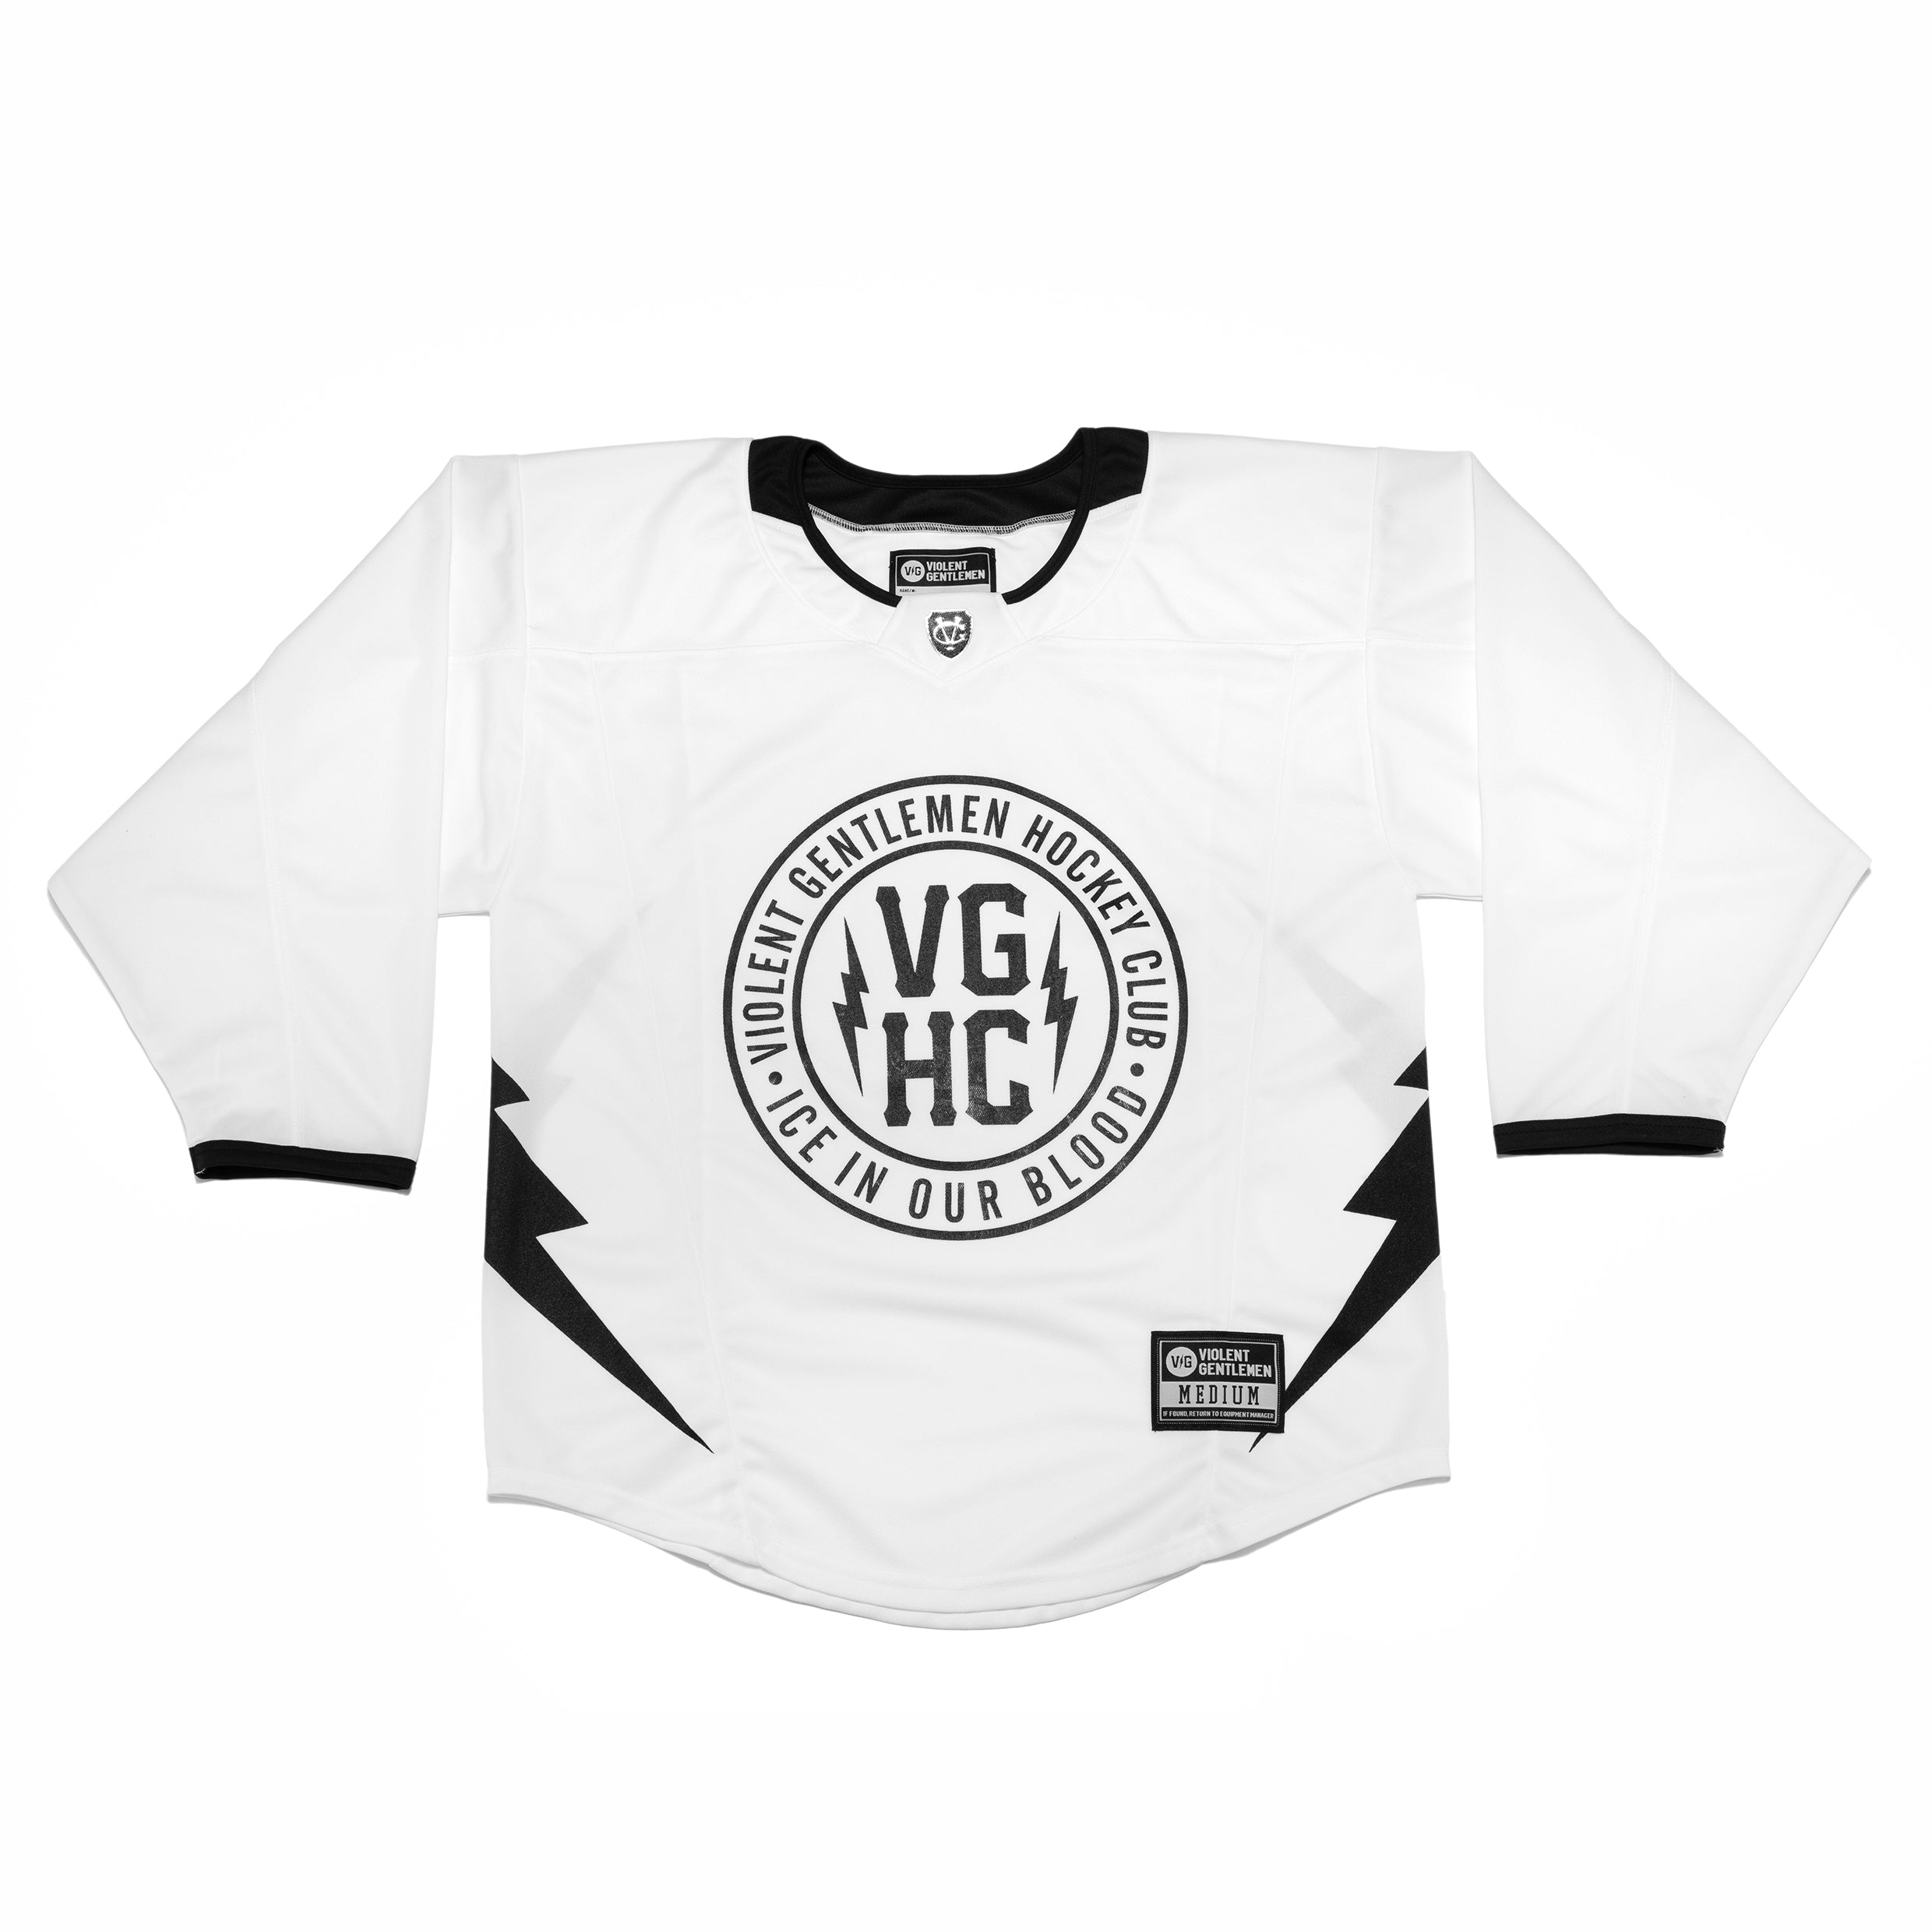 Stadium Adult Hockey Jersey - in Black/White/Grey Size X-Small